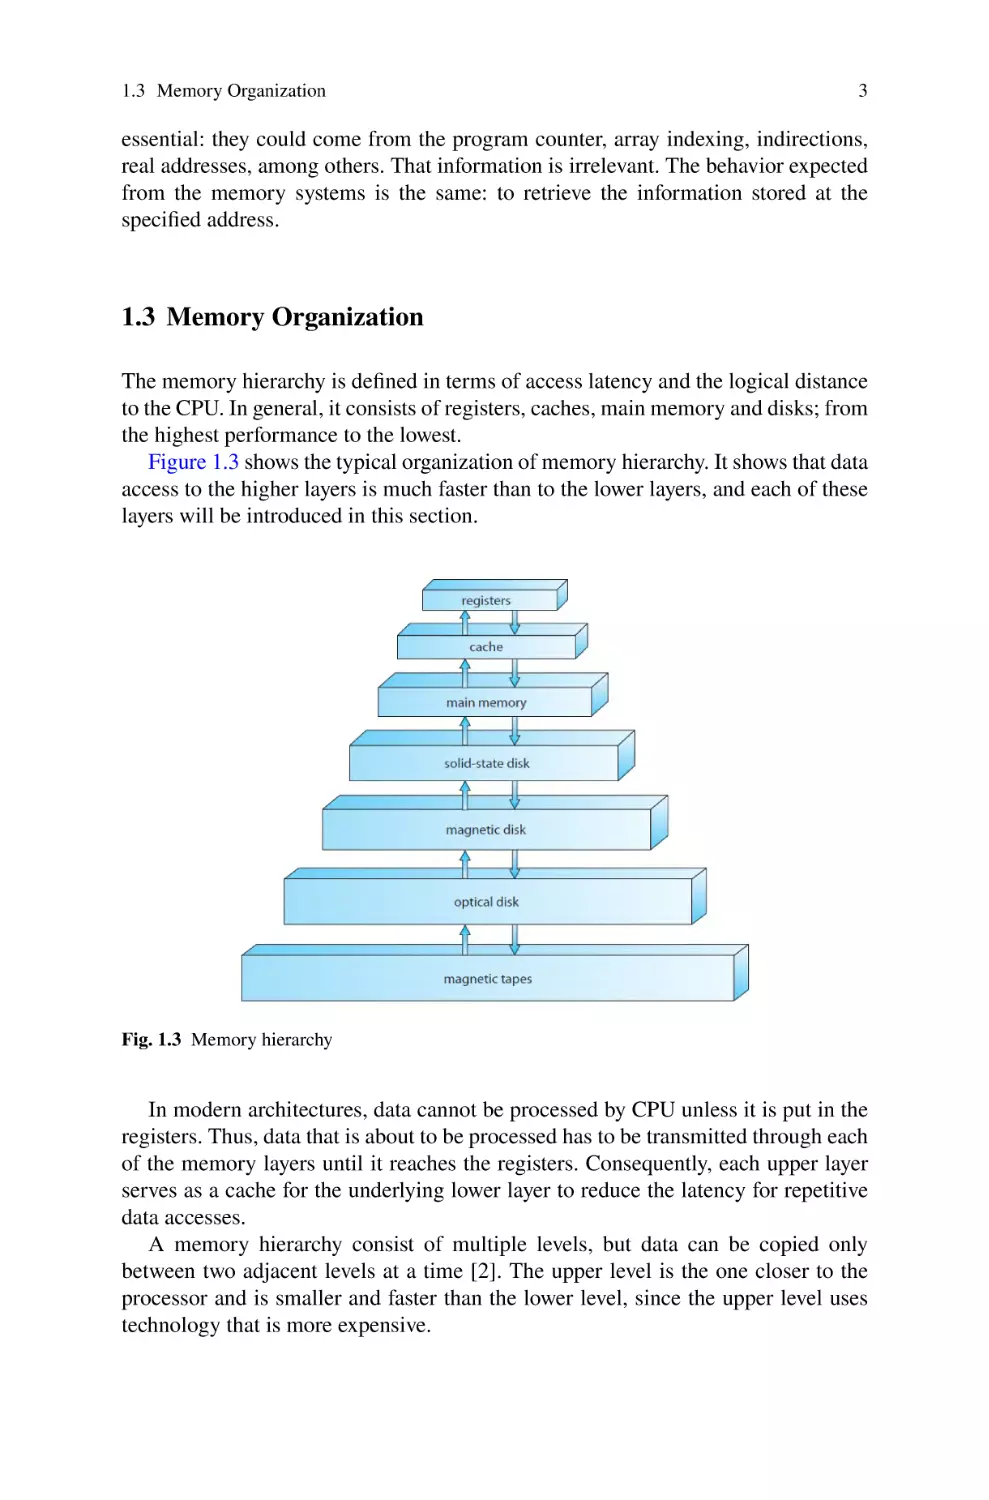 1.3 Memory Organization